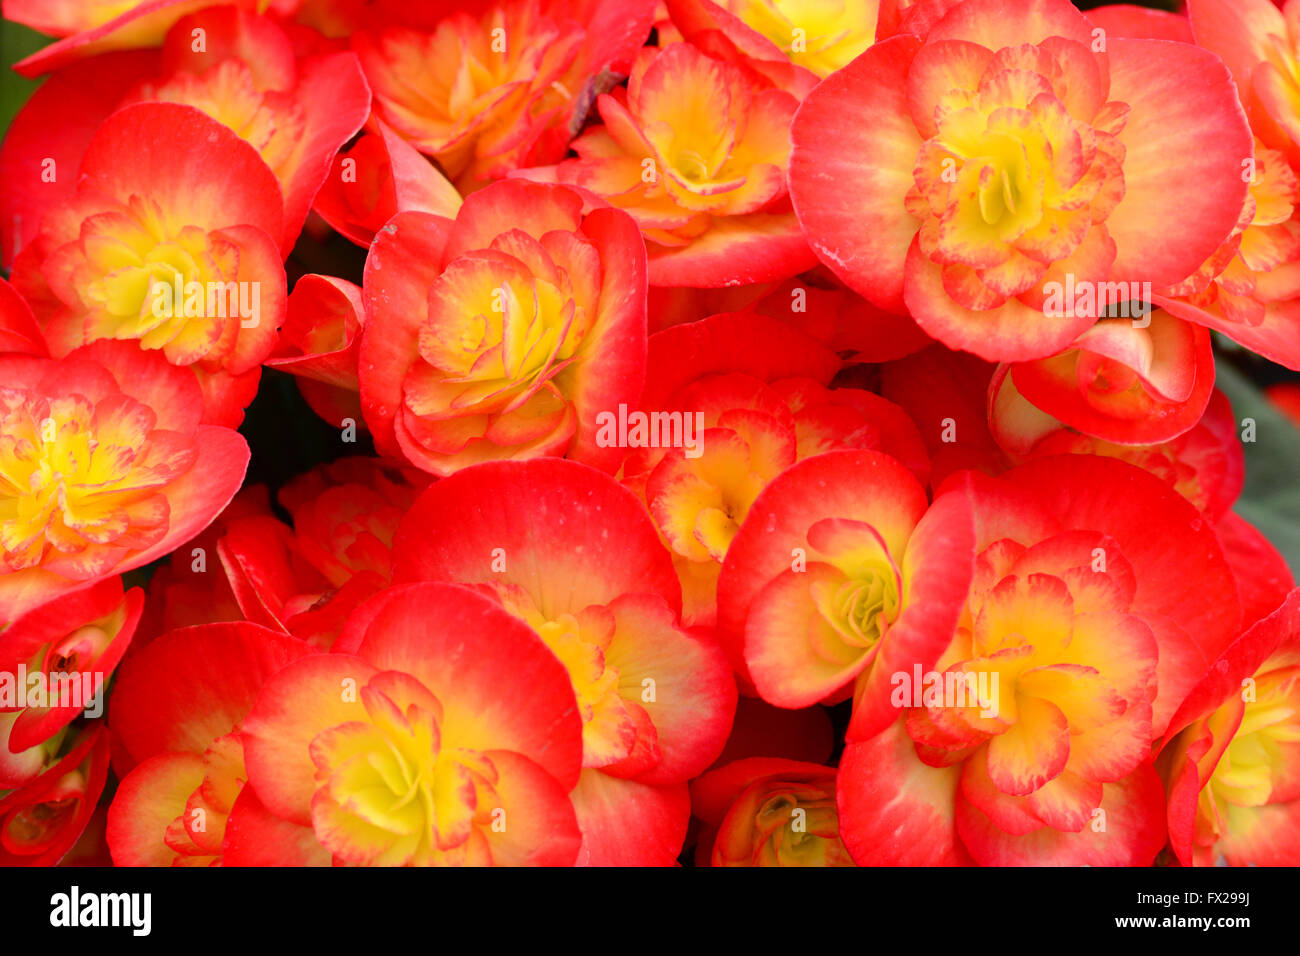 Begonia flowers close-up Stock Photo